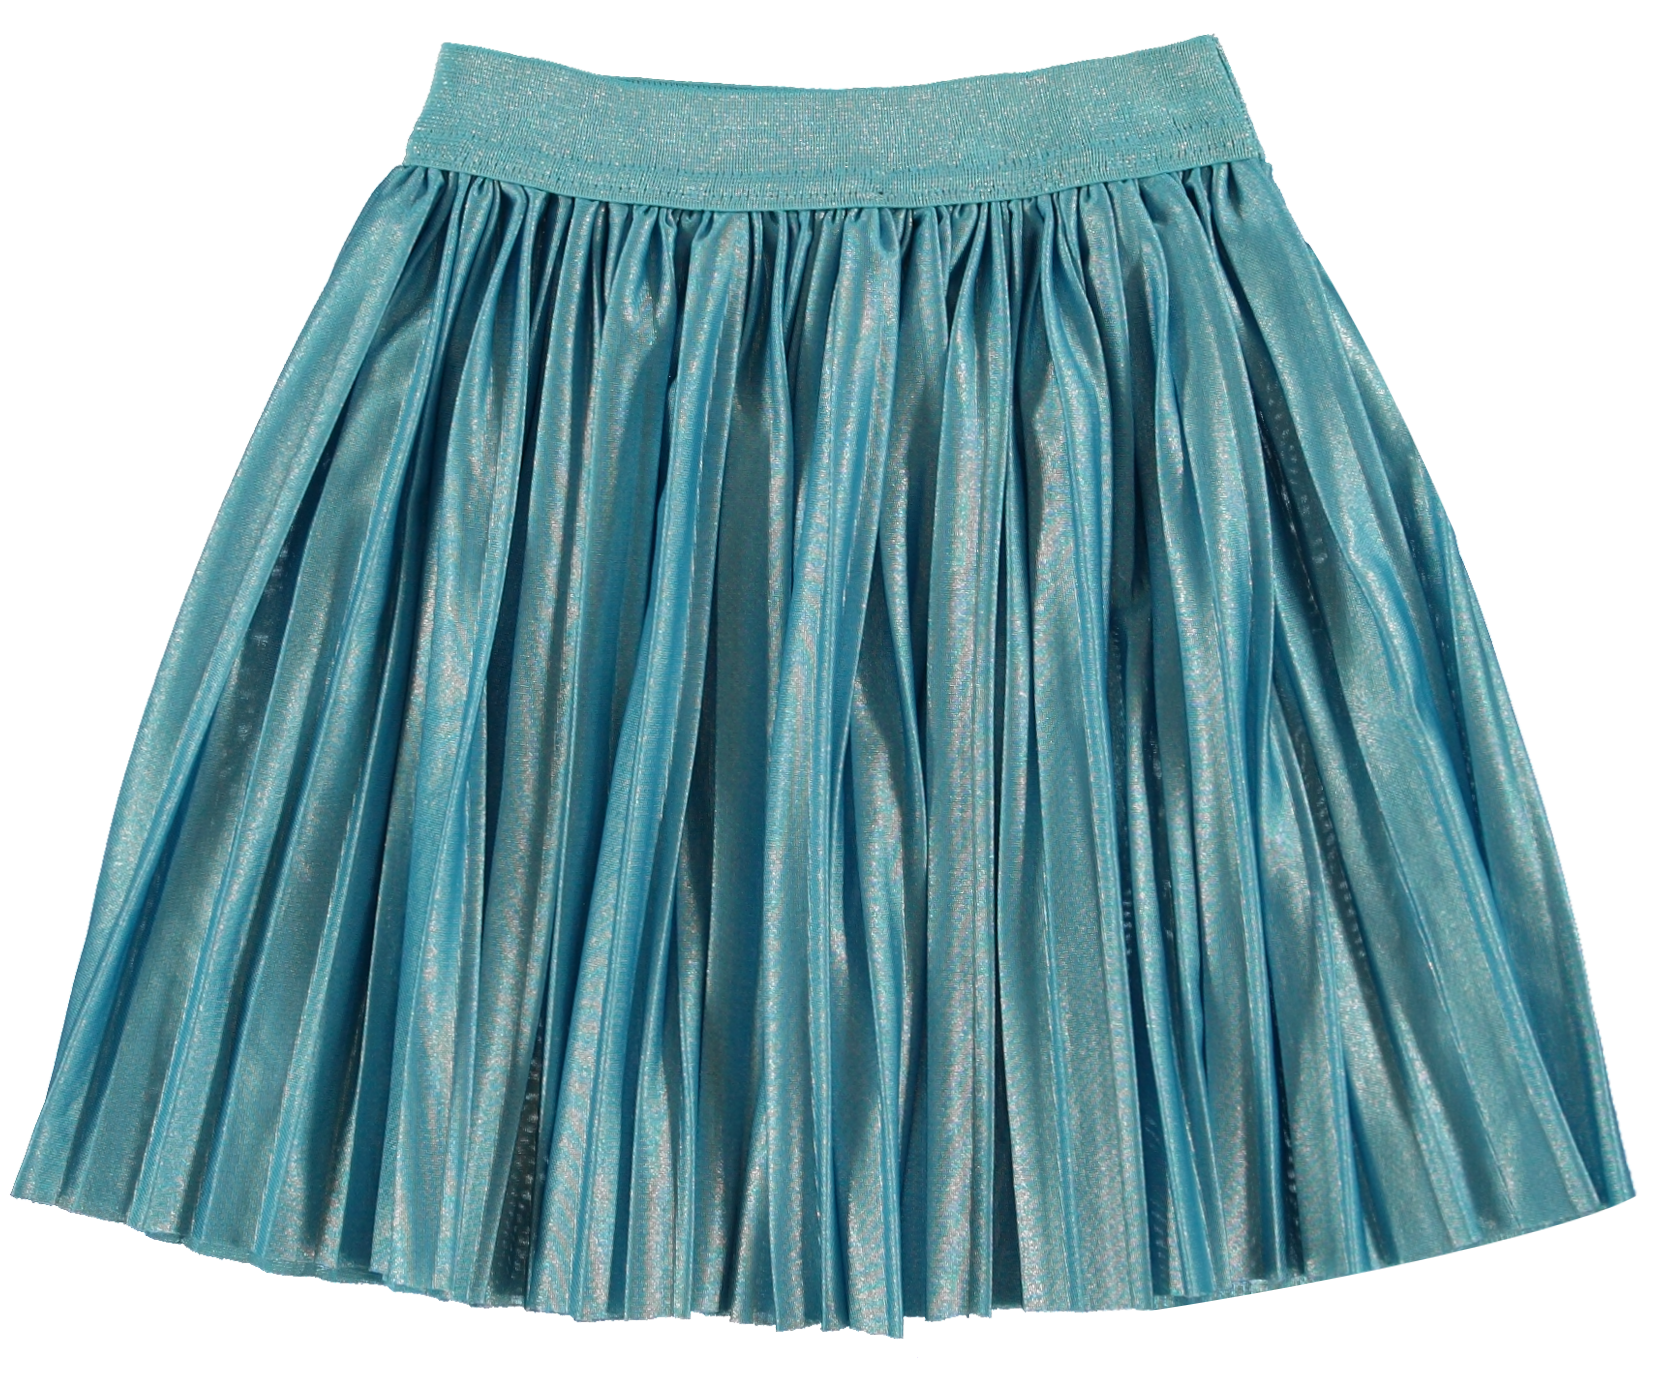 OChill-Girls Skirt Danique-Blue